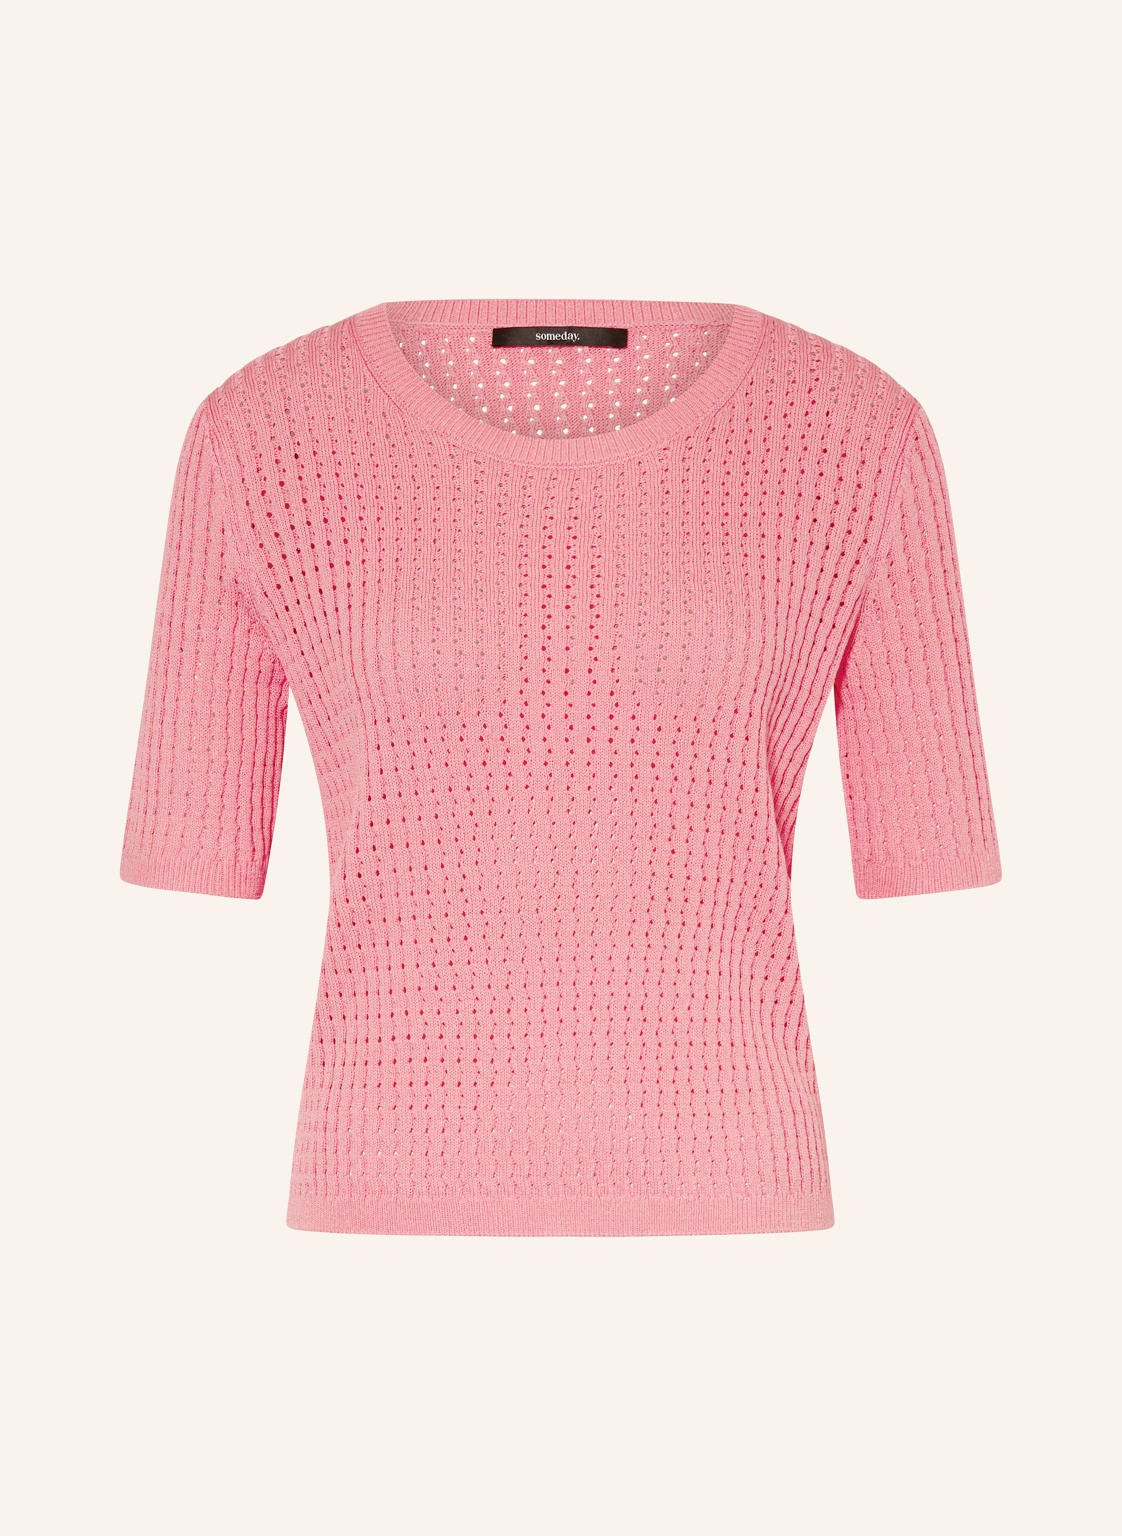 Someday Strickshirt Taroline pink von someday